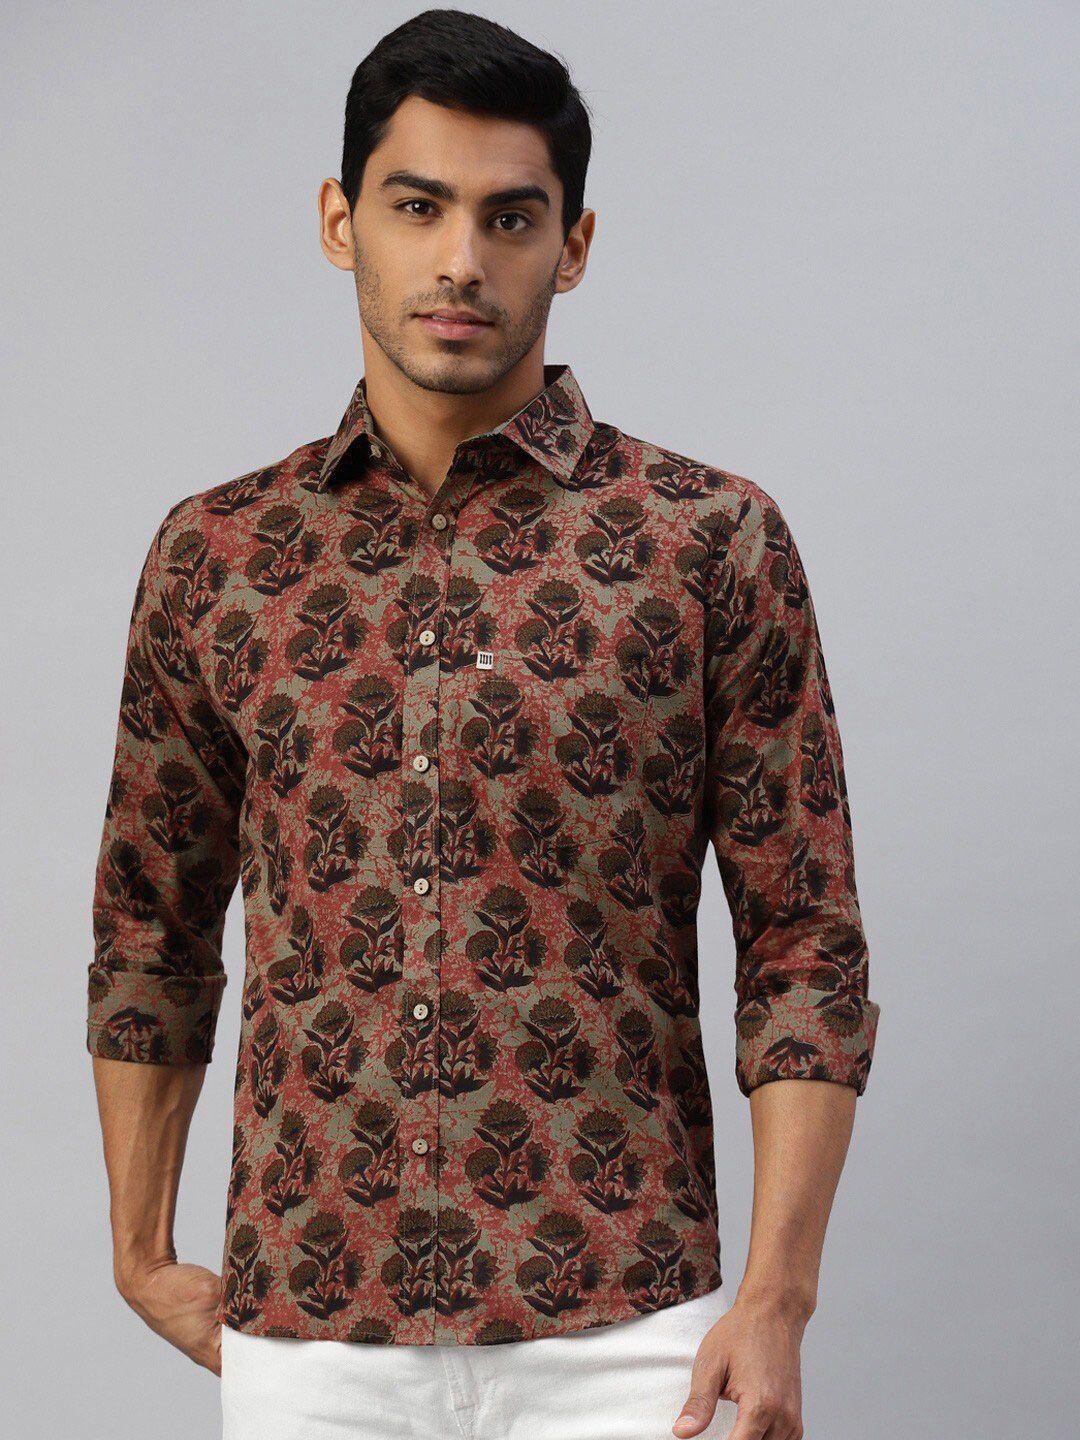 readiprint fashions men floral printed casual cotton shirt